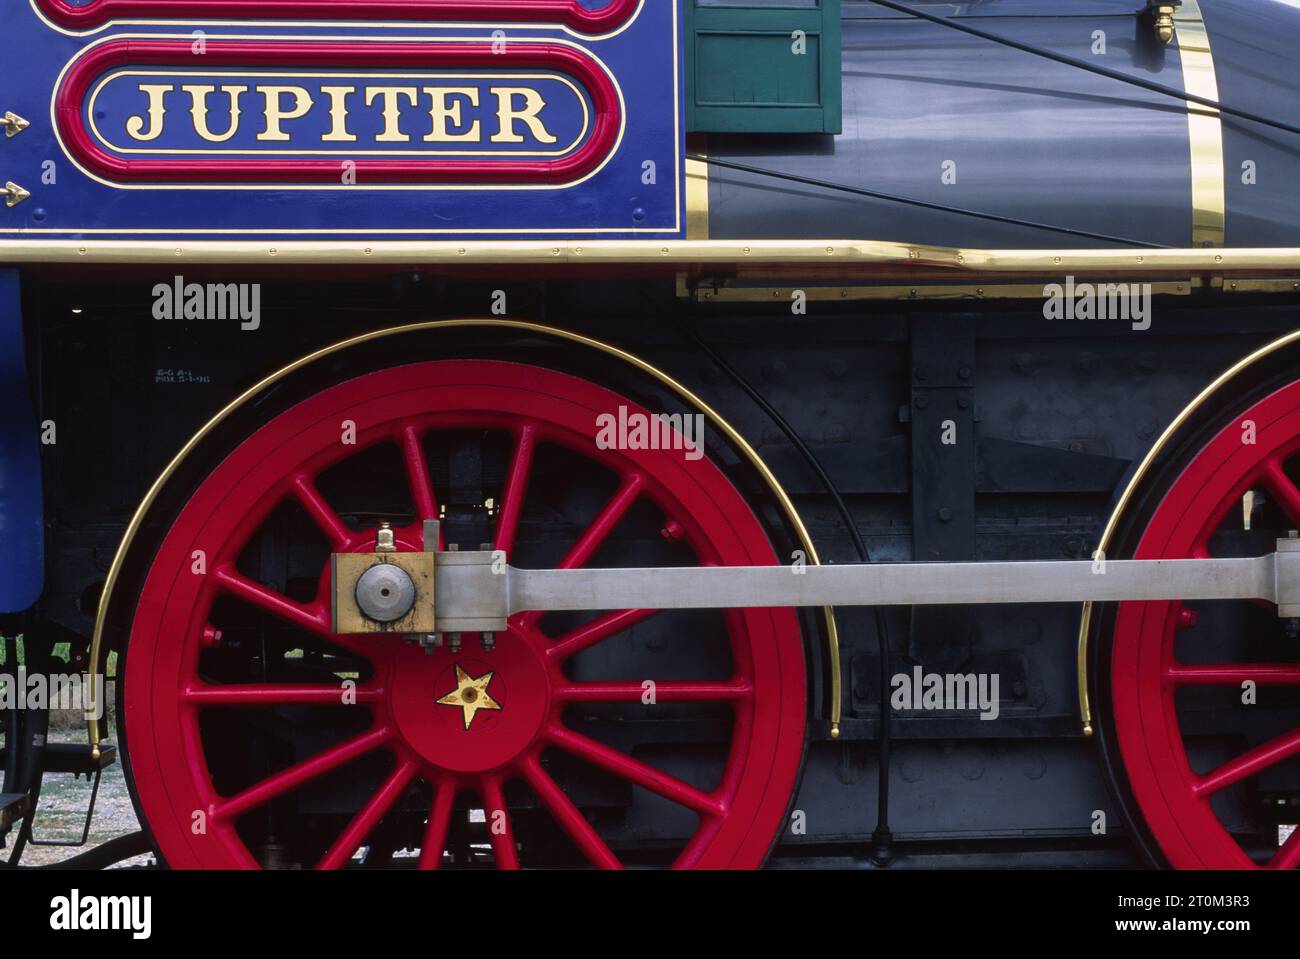 Steam engine Jupiter, Golden Spike National Historic Site, Utah Stock Photo